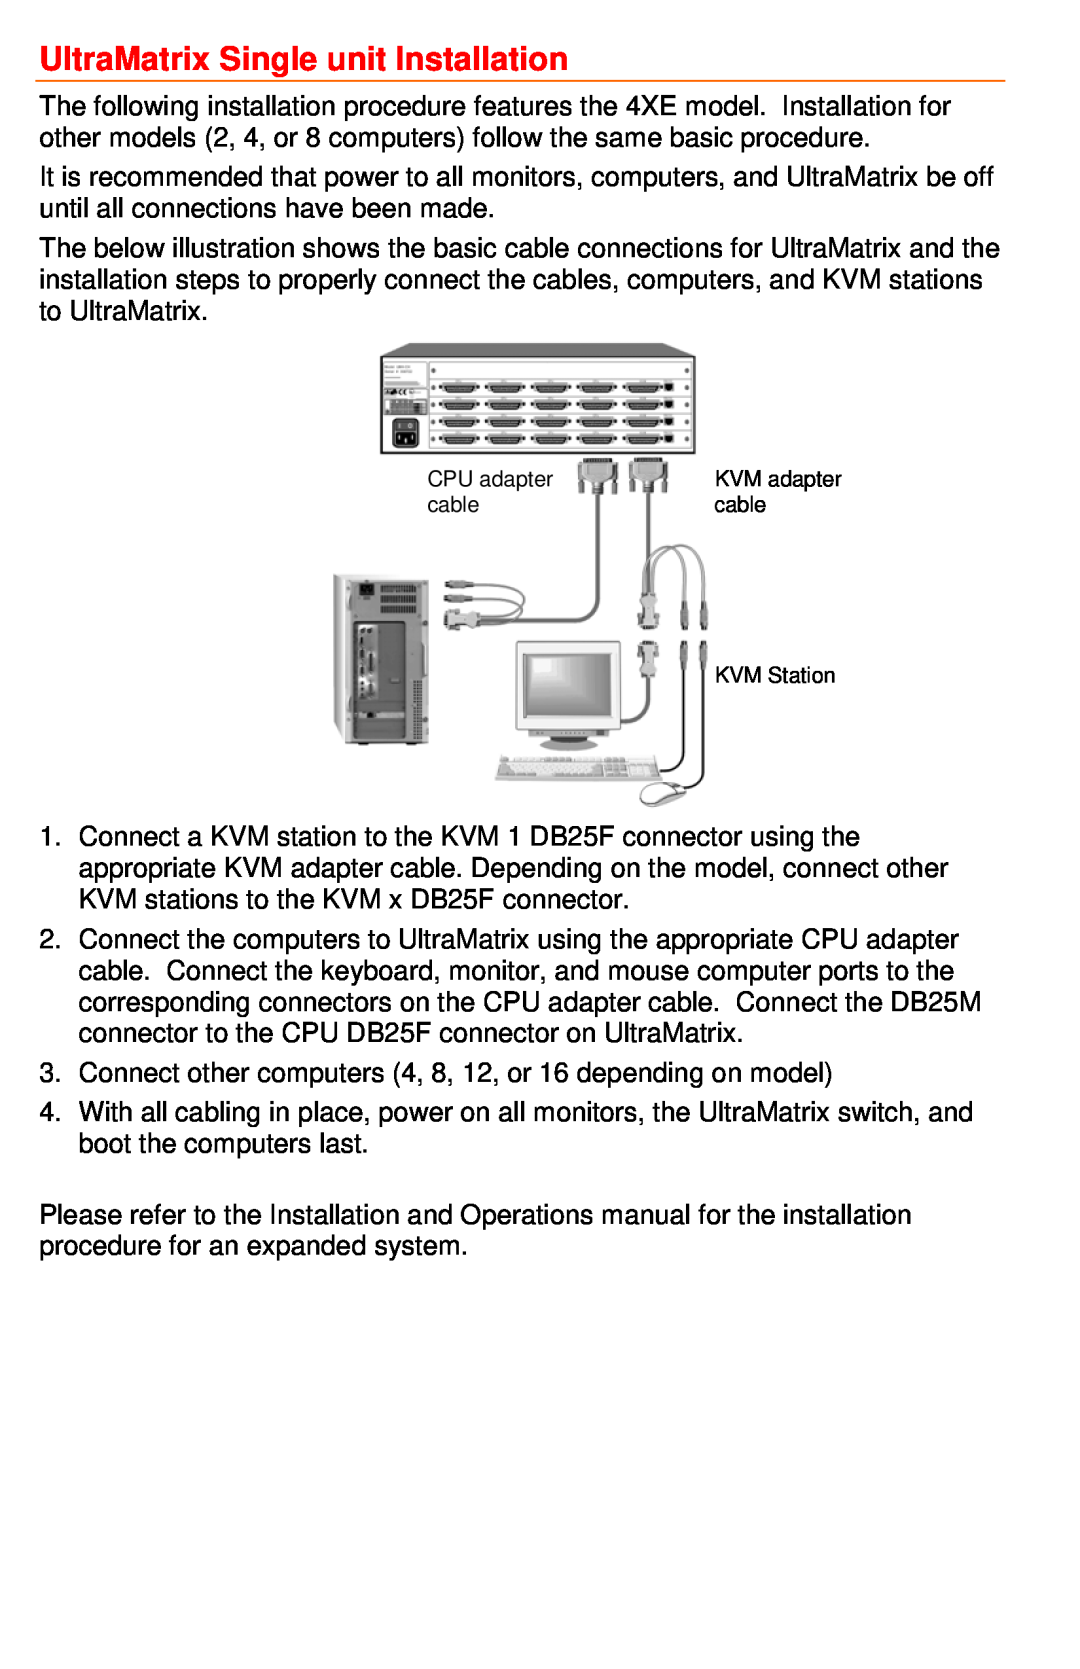 Rose electronic 4XE manual UltraMatrix Single unit Installation 